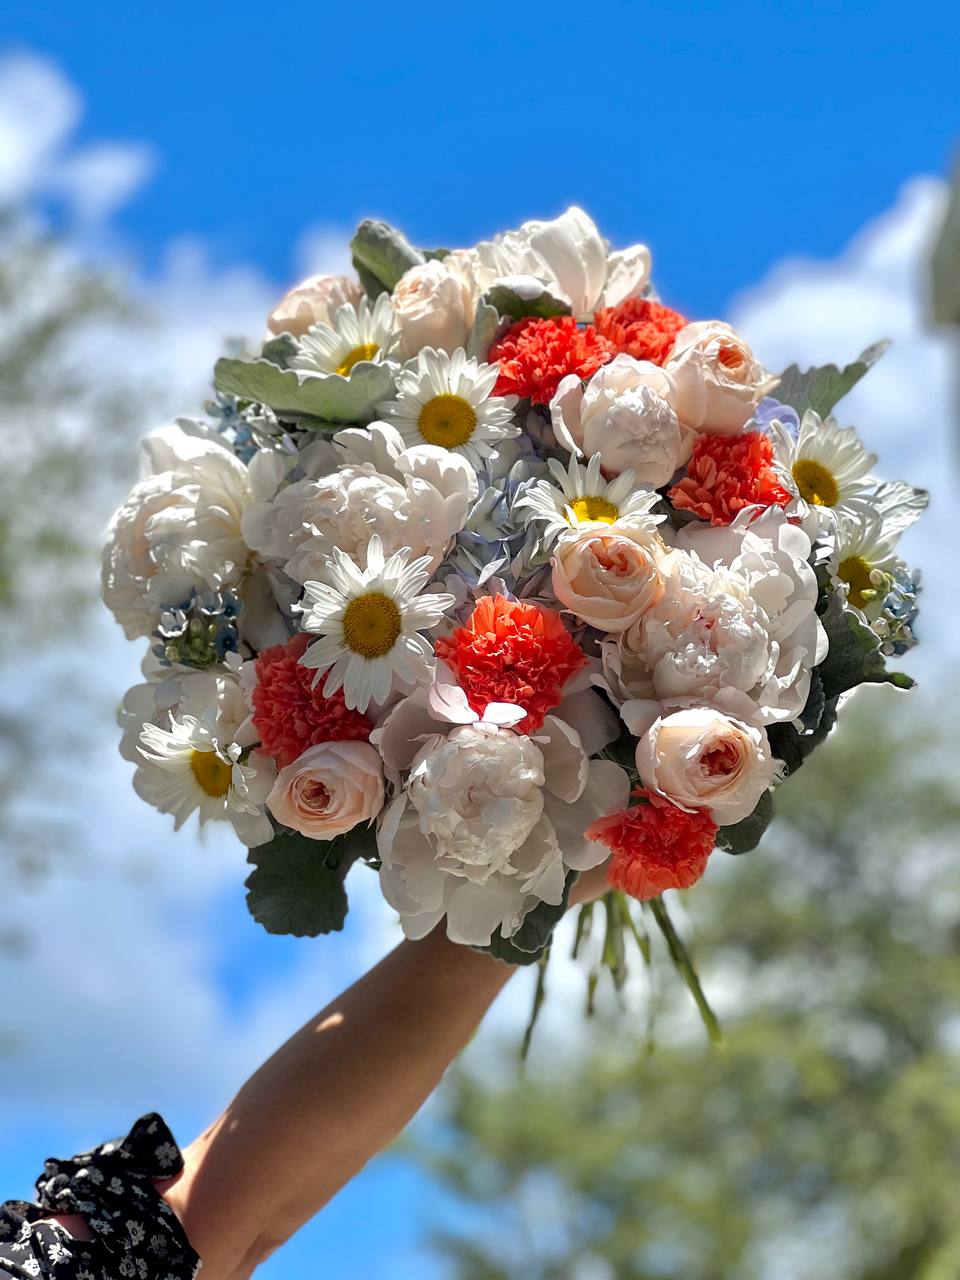 Sunshine Lover - Beautiful mix of David Austen garden roses, daisies, blush peonies, hydrangea, and dusty miller - Maison la Fleur